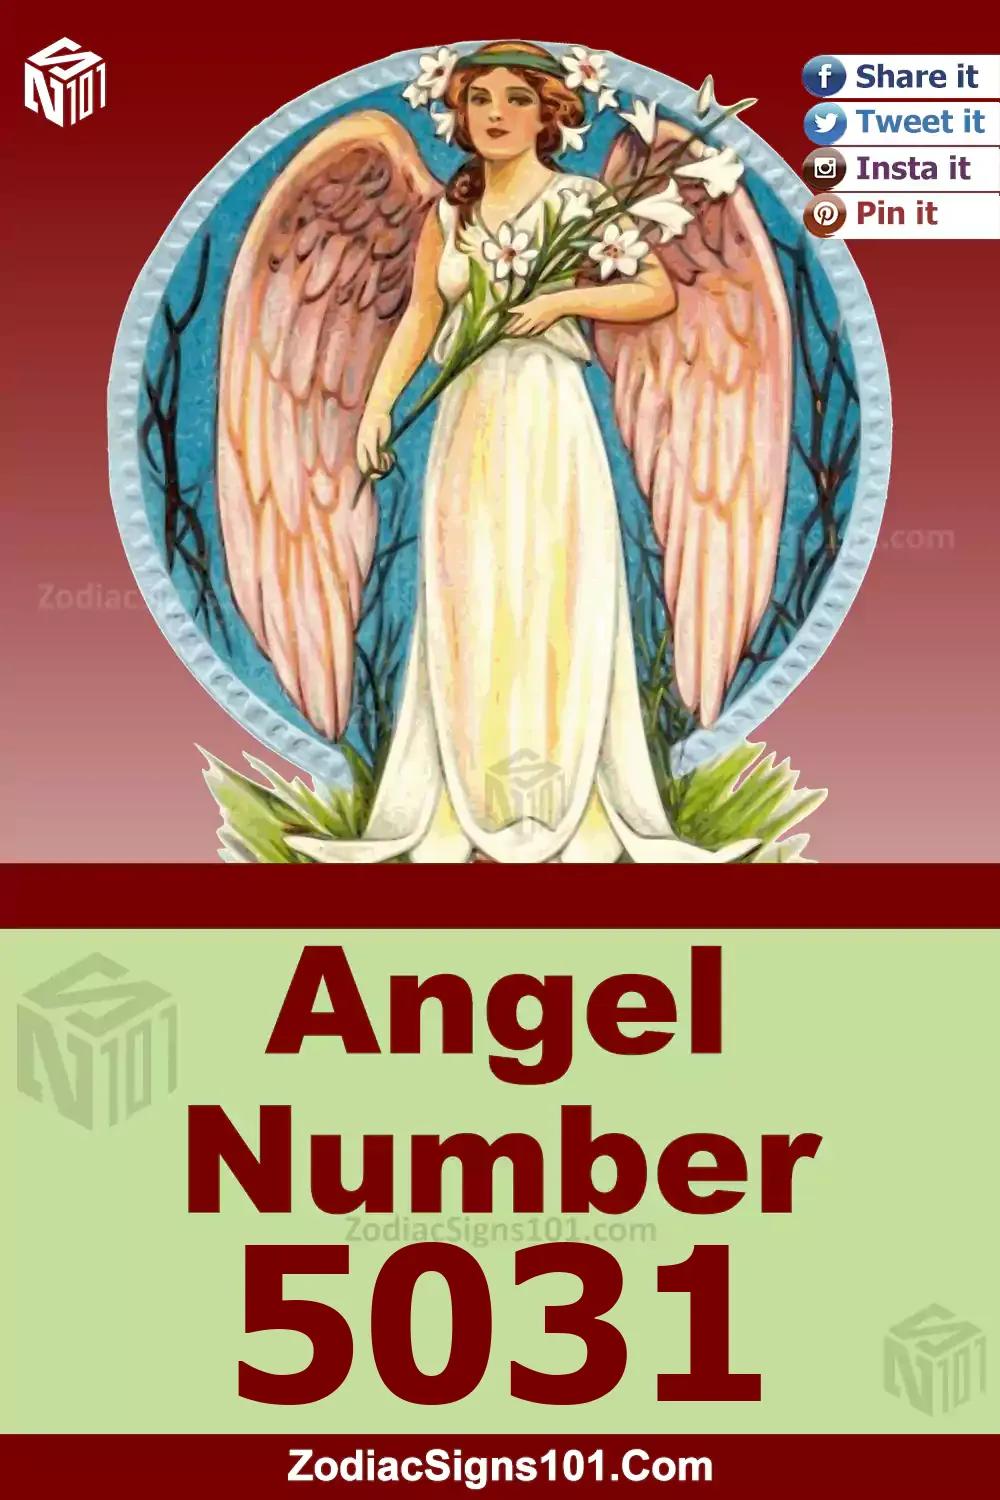 5031-Angel-Number-Meaning.jpg